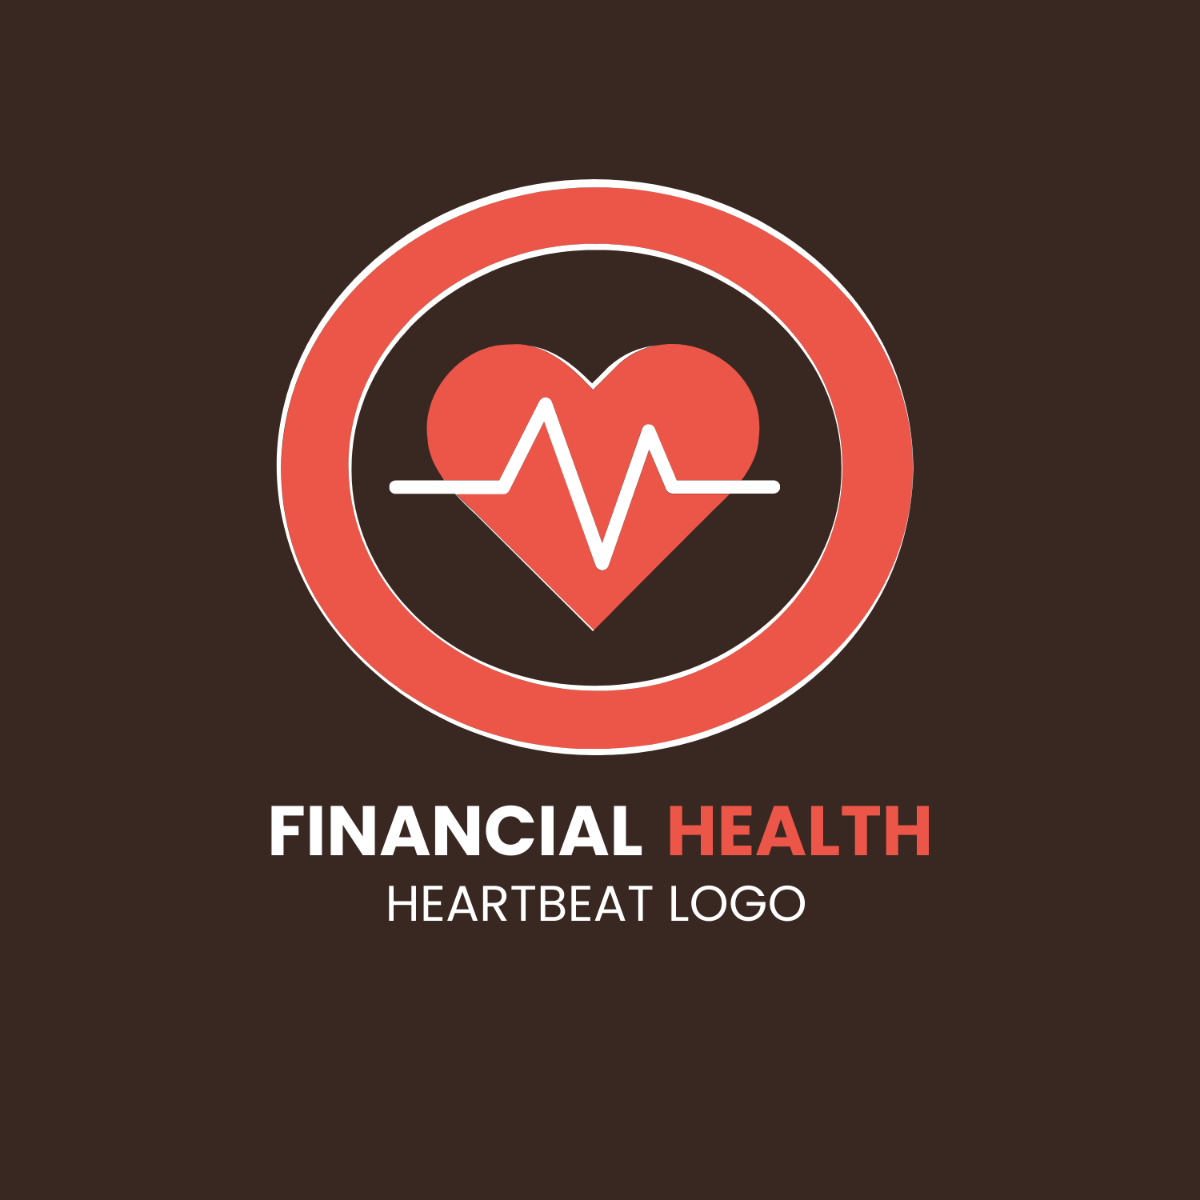 Financial Health Heartbeat Logo Template